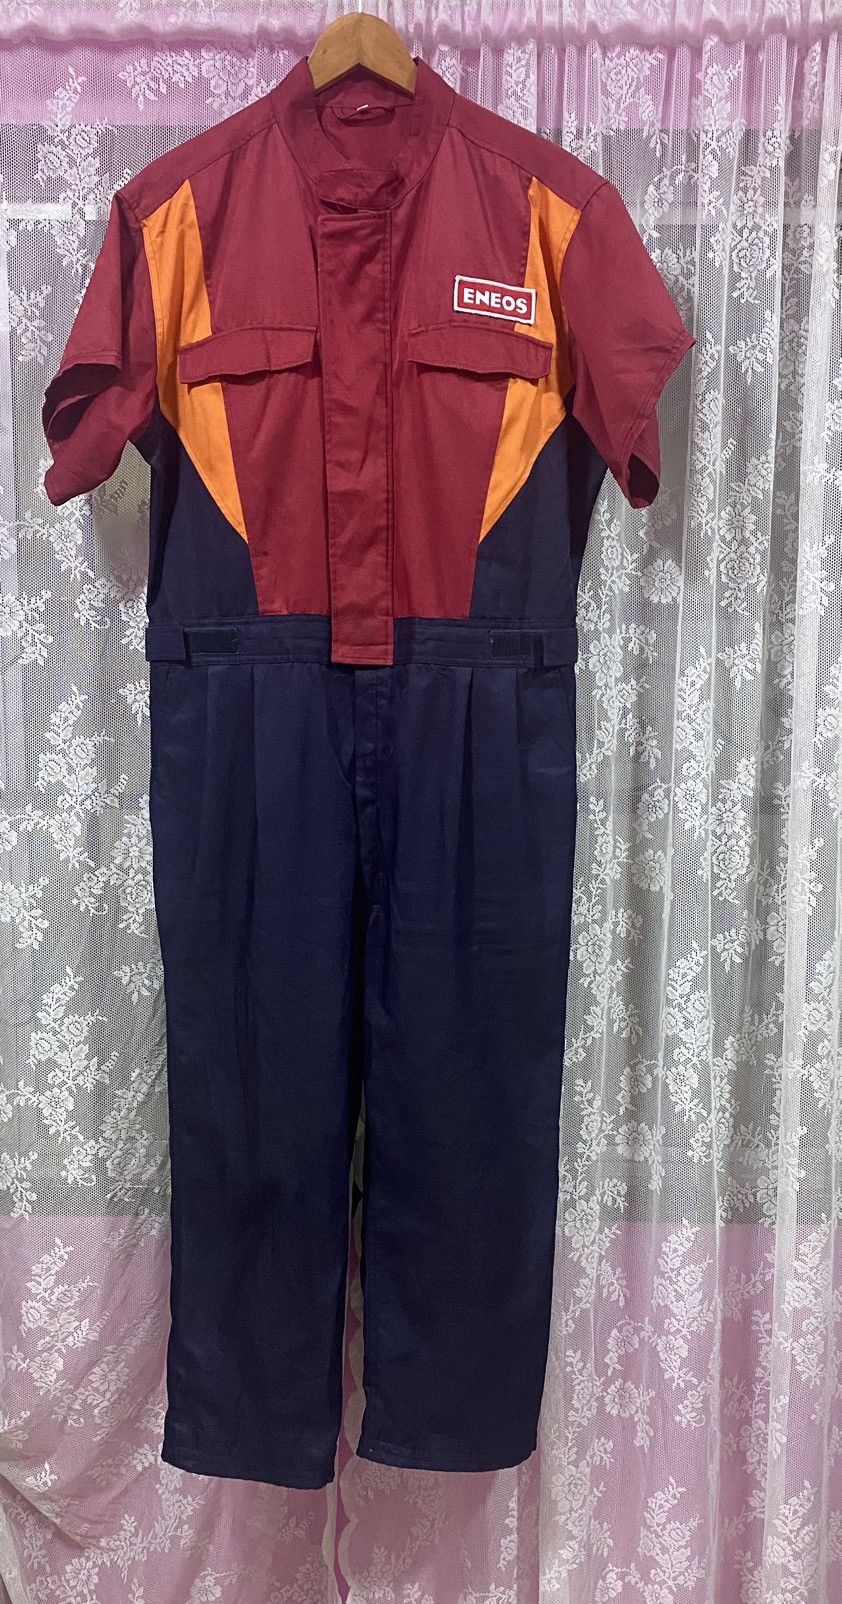 Vintage Eneos Overalls Jumpsuit - 1